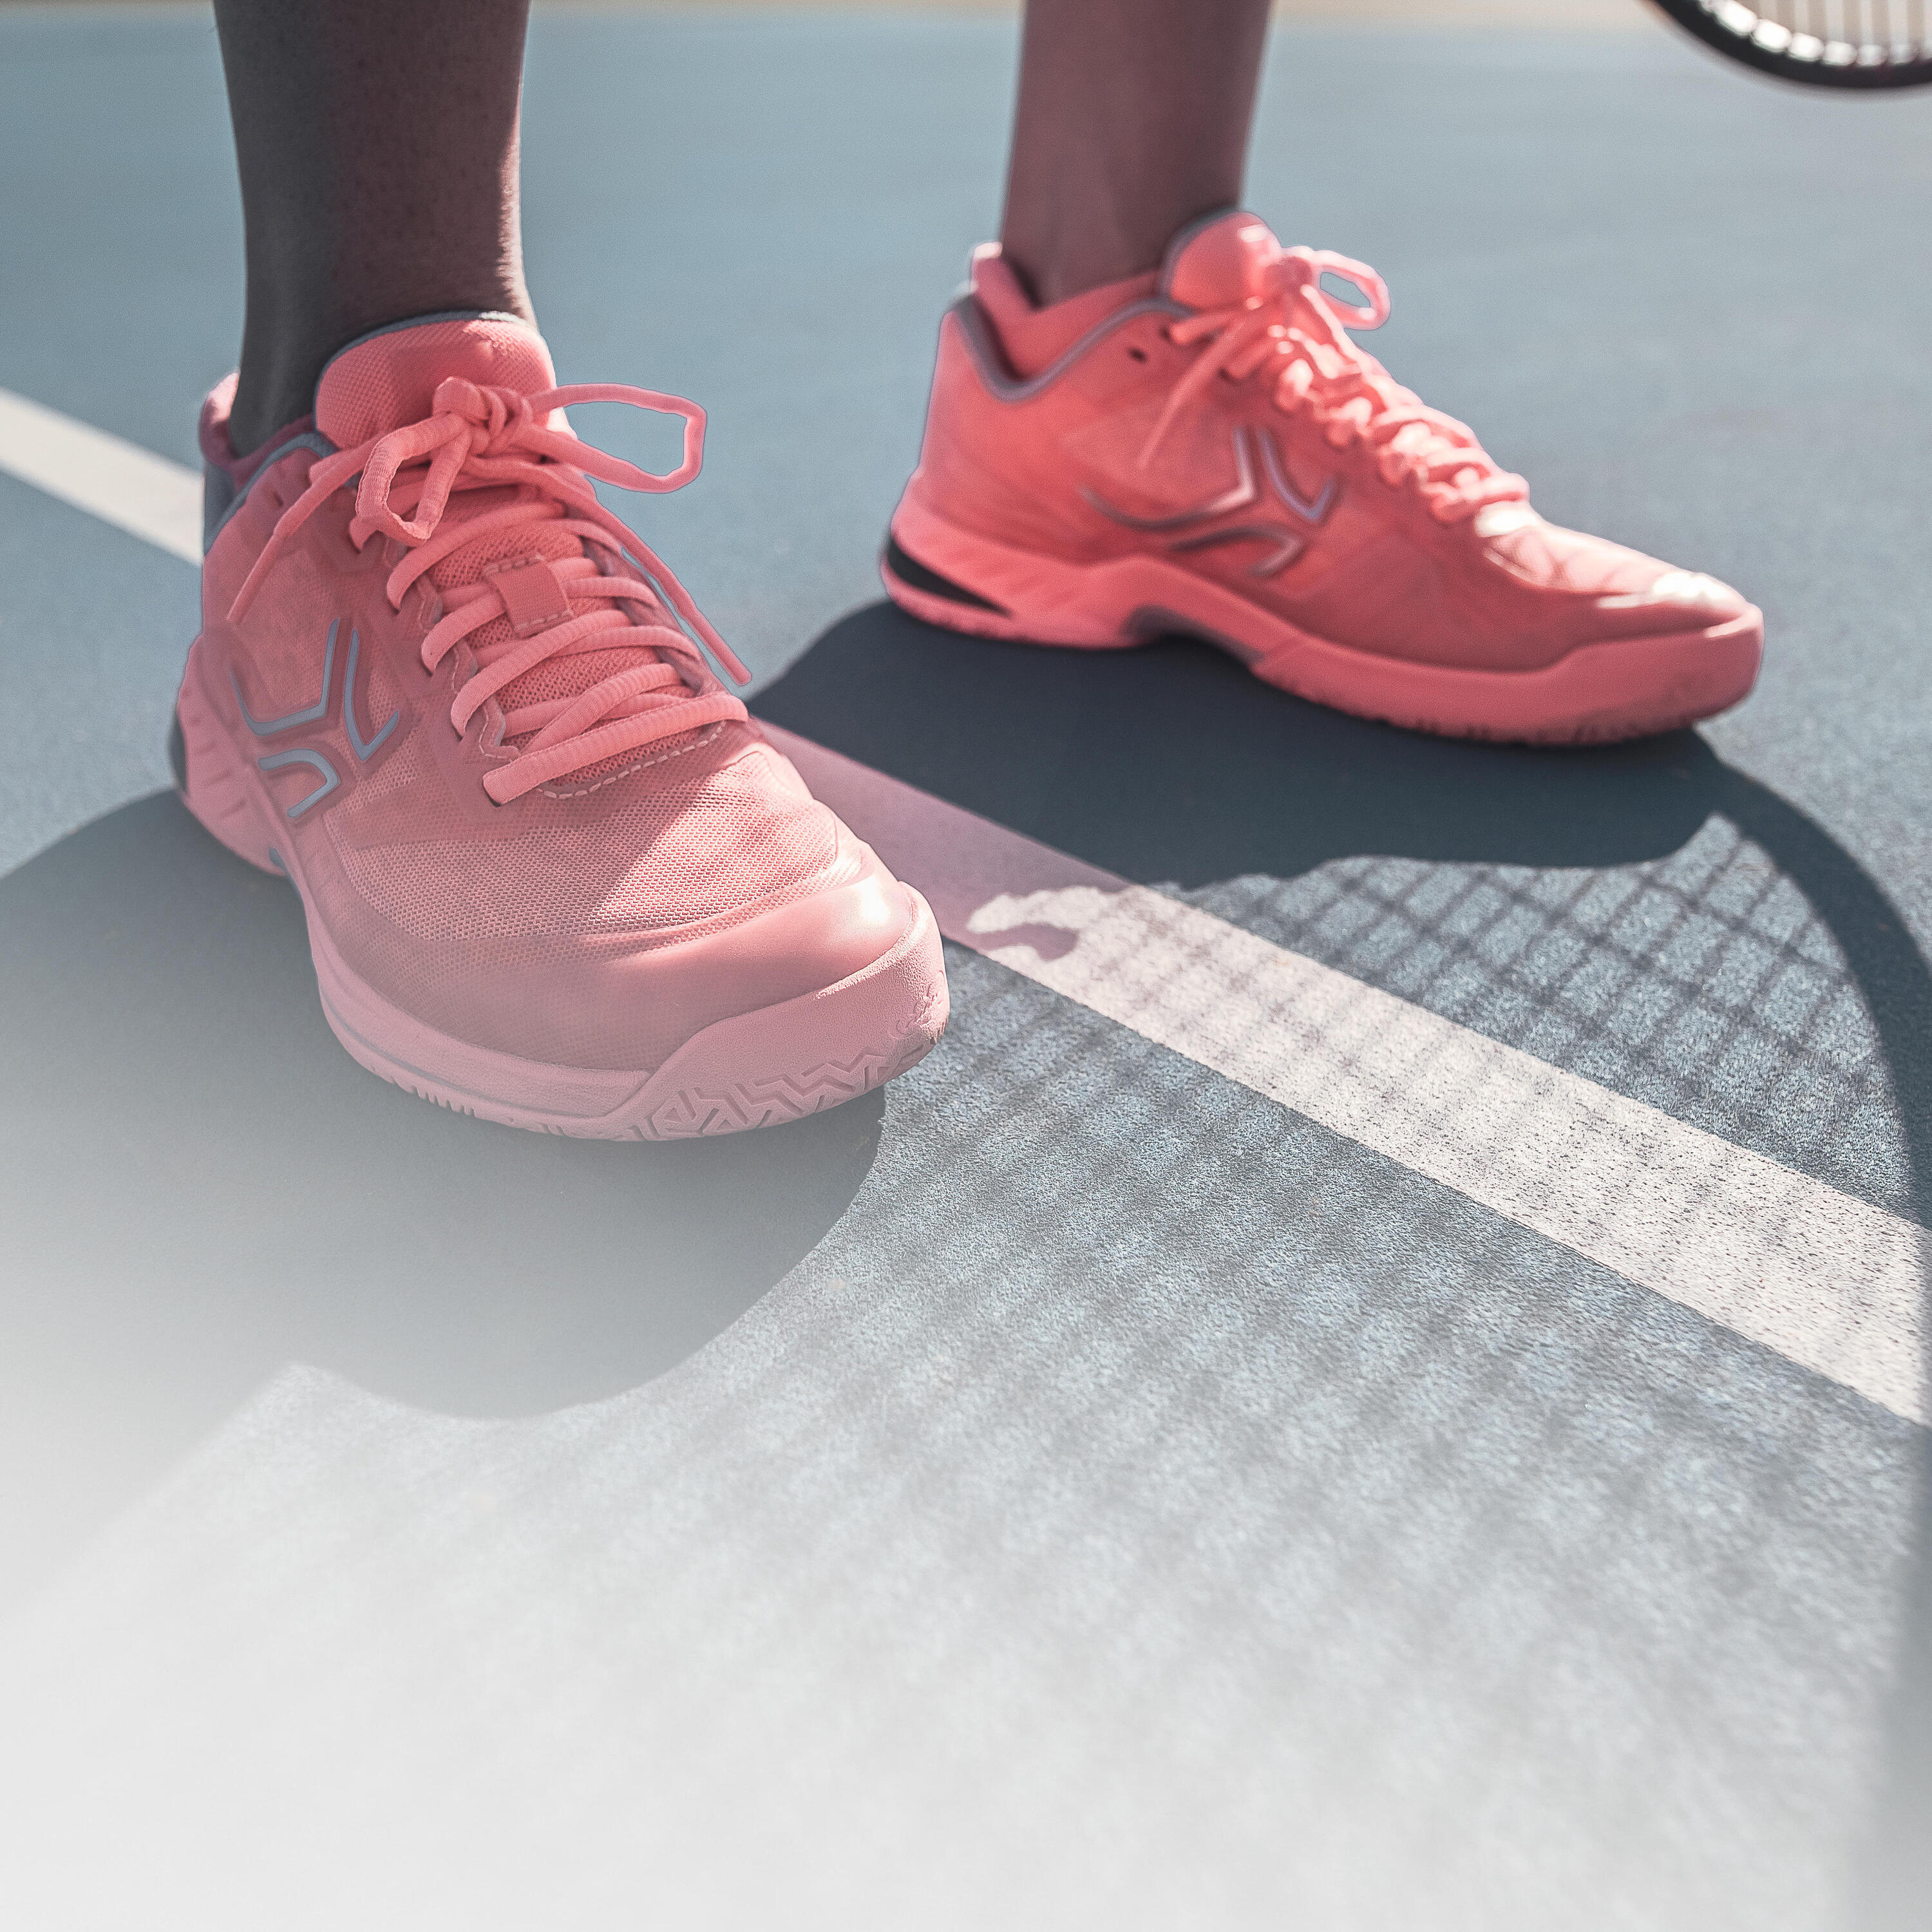 Women's Tennis Shoes TS990 - Coral 7/8